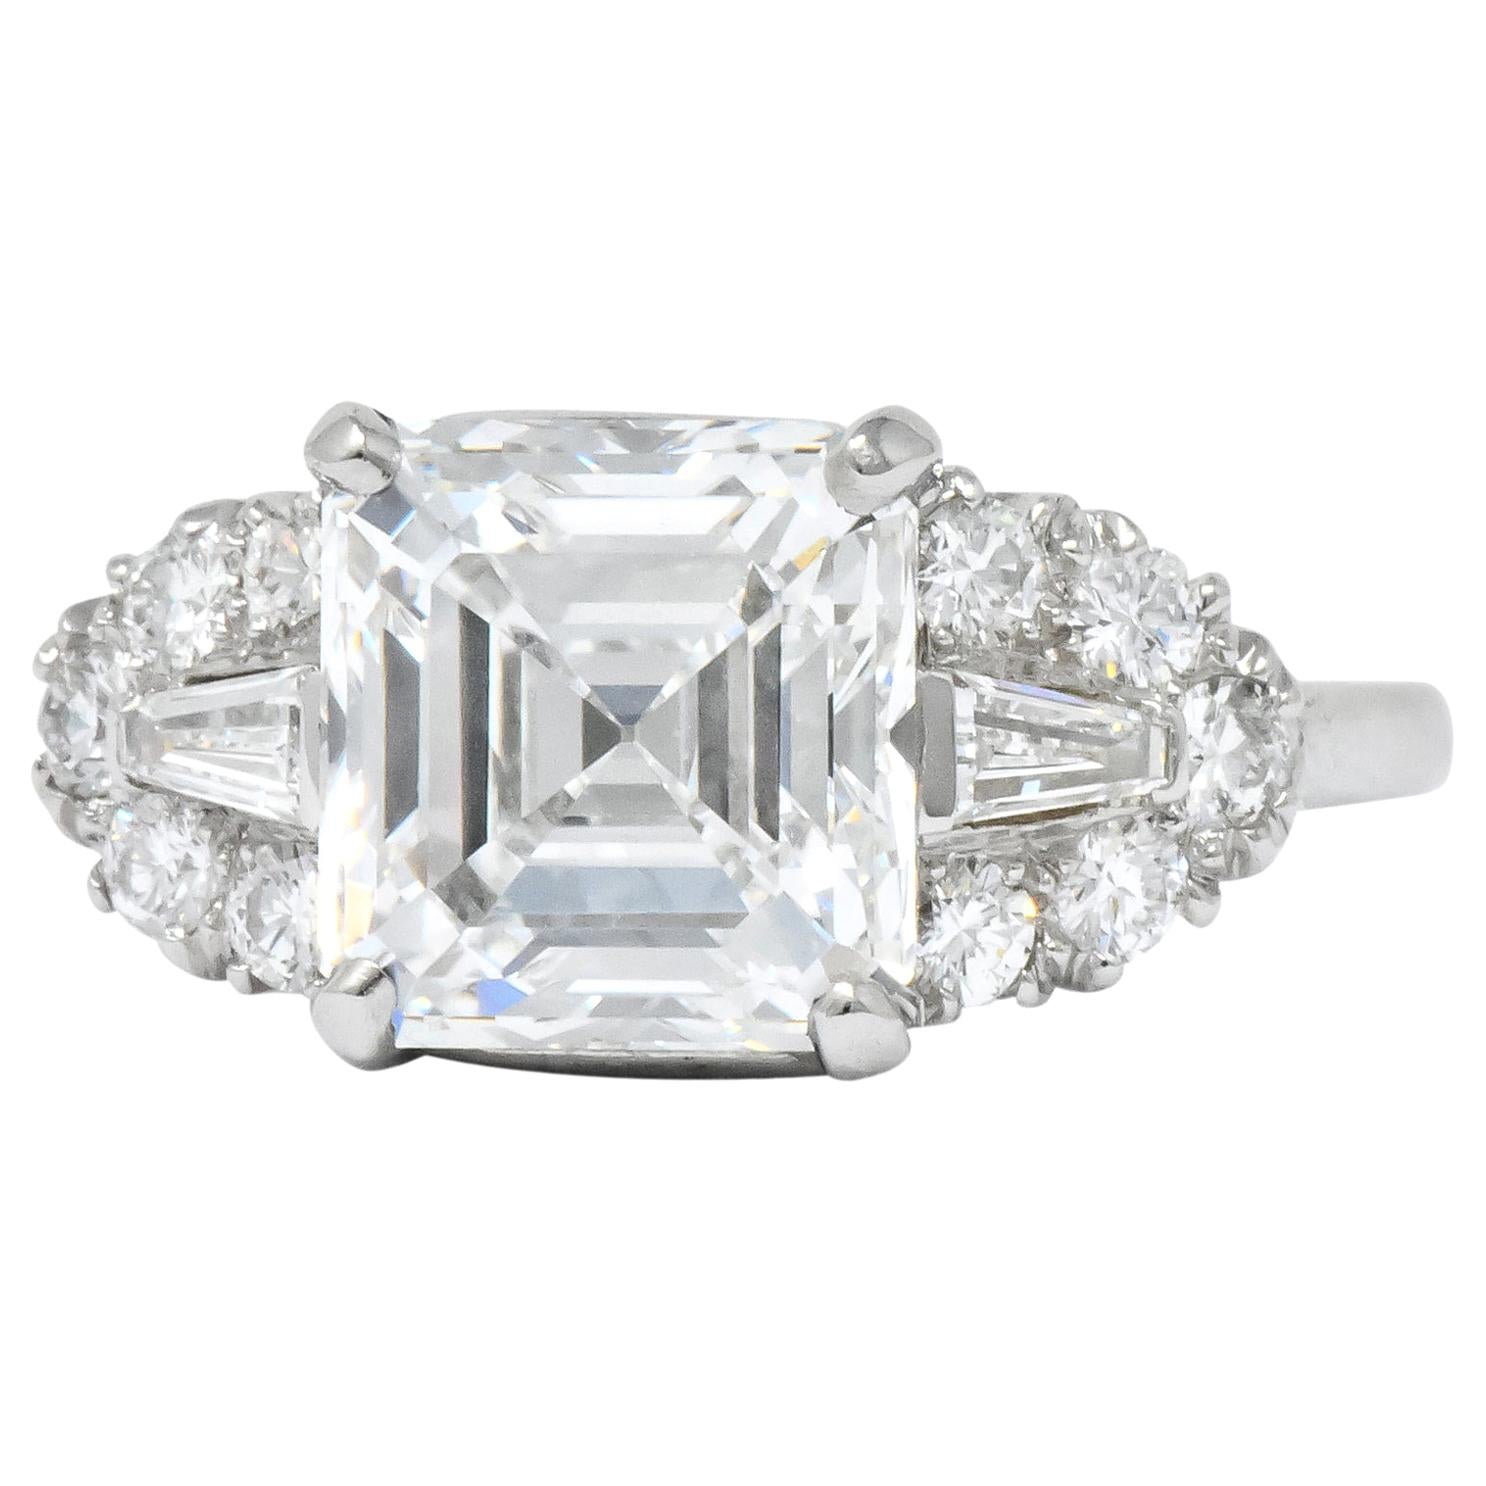 Bailey Banks & Biddle 1940s 4.08 Carat Asscher Diamond Platinum Engagement Ring